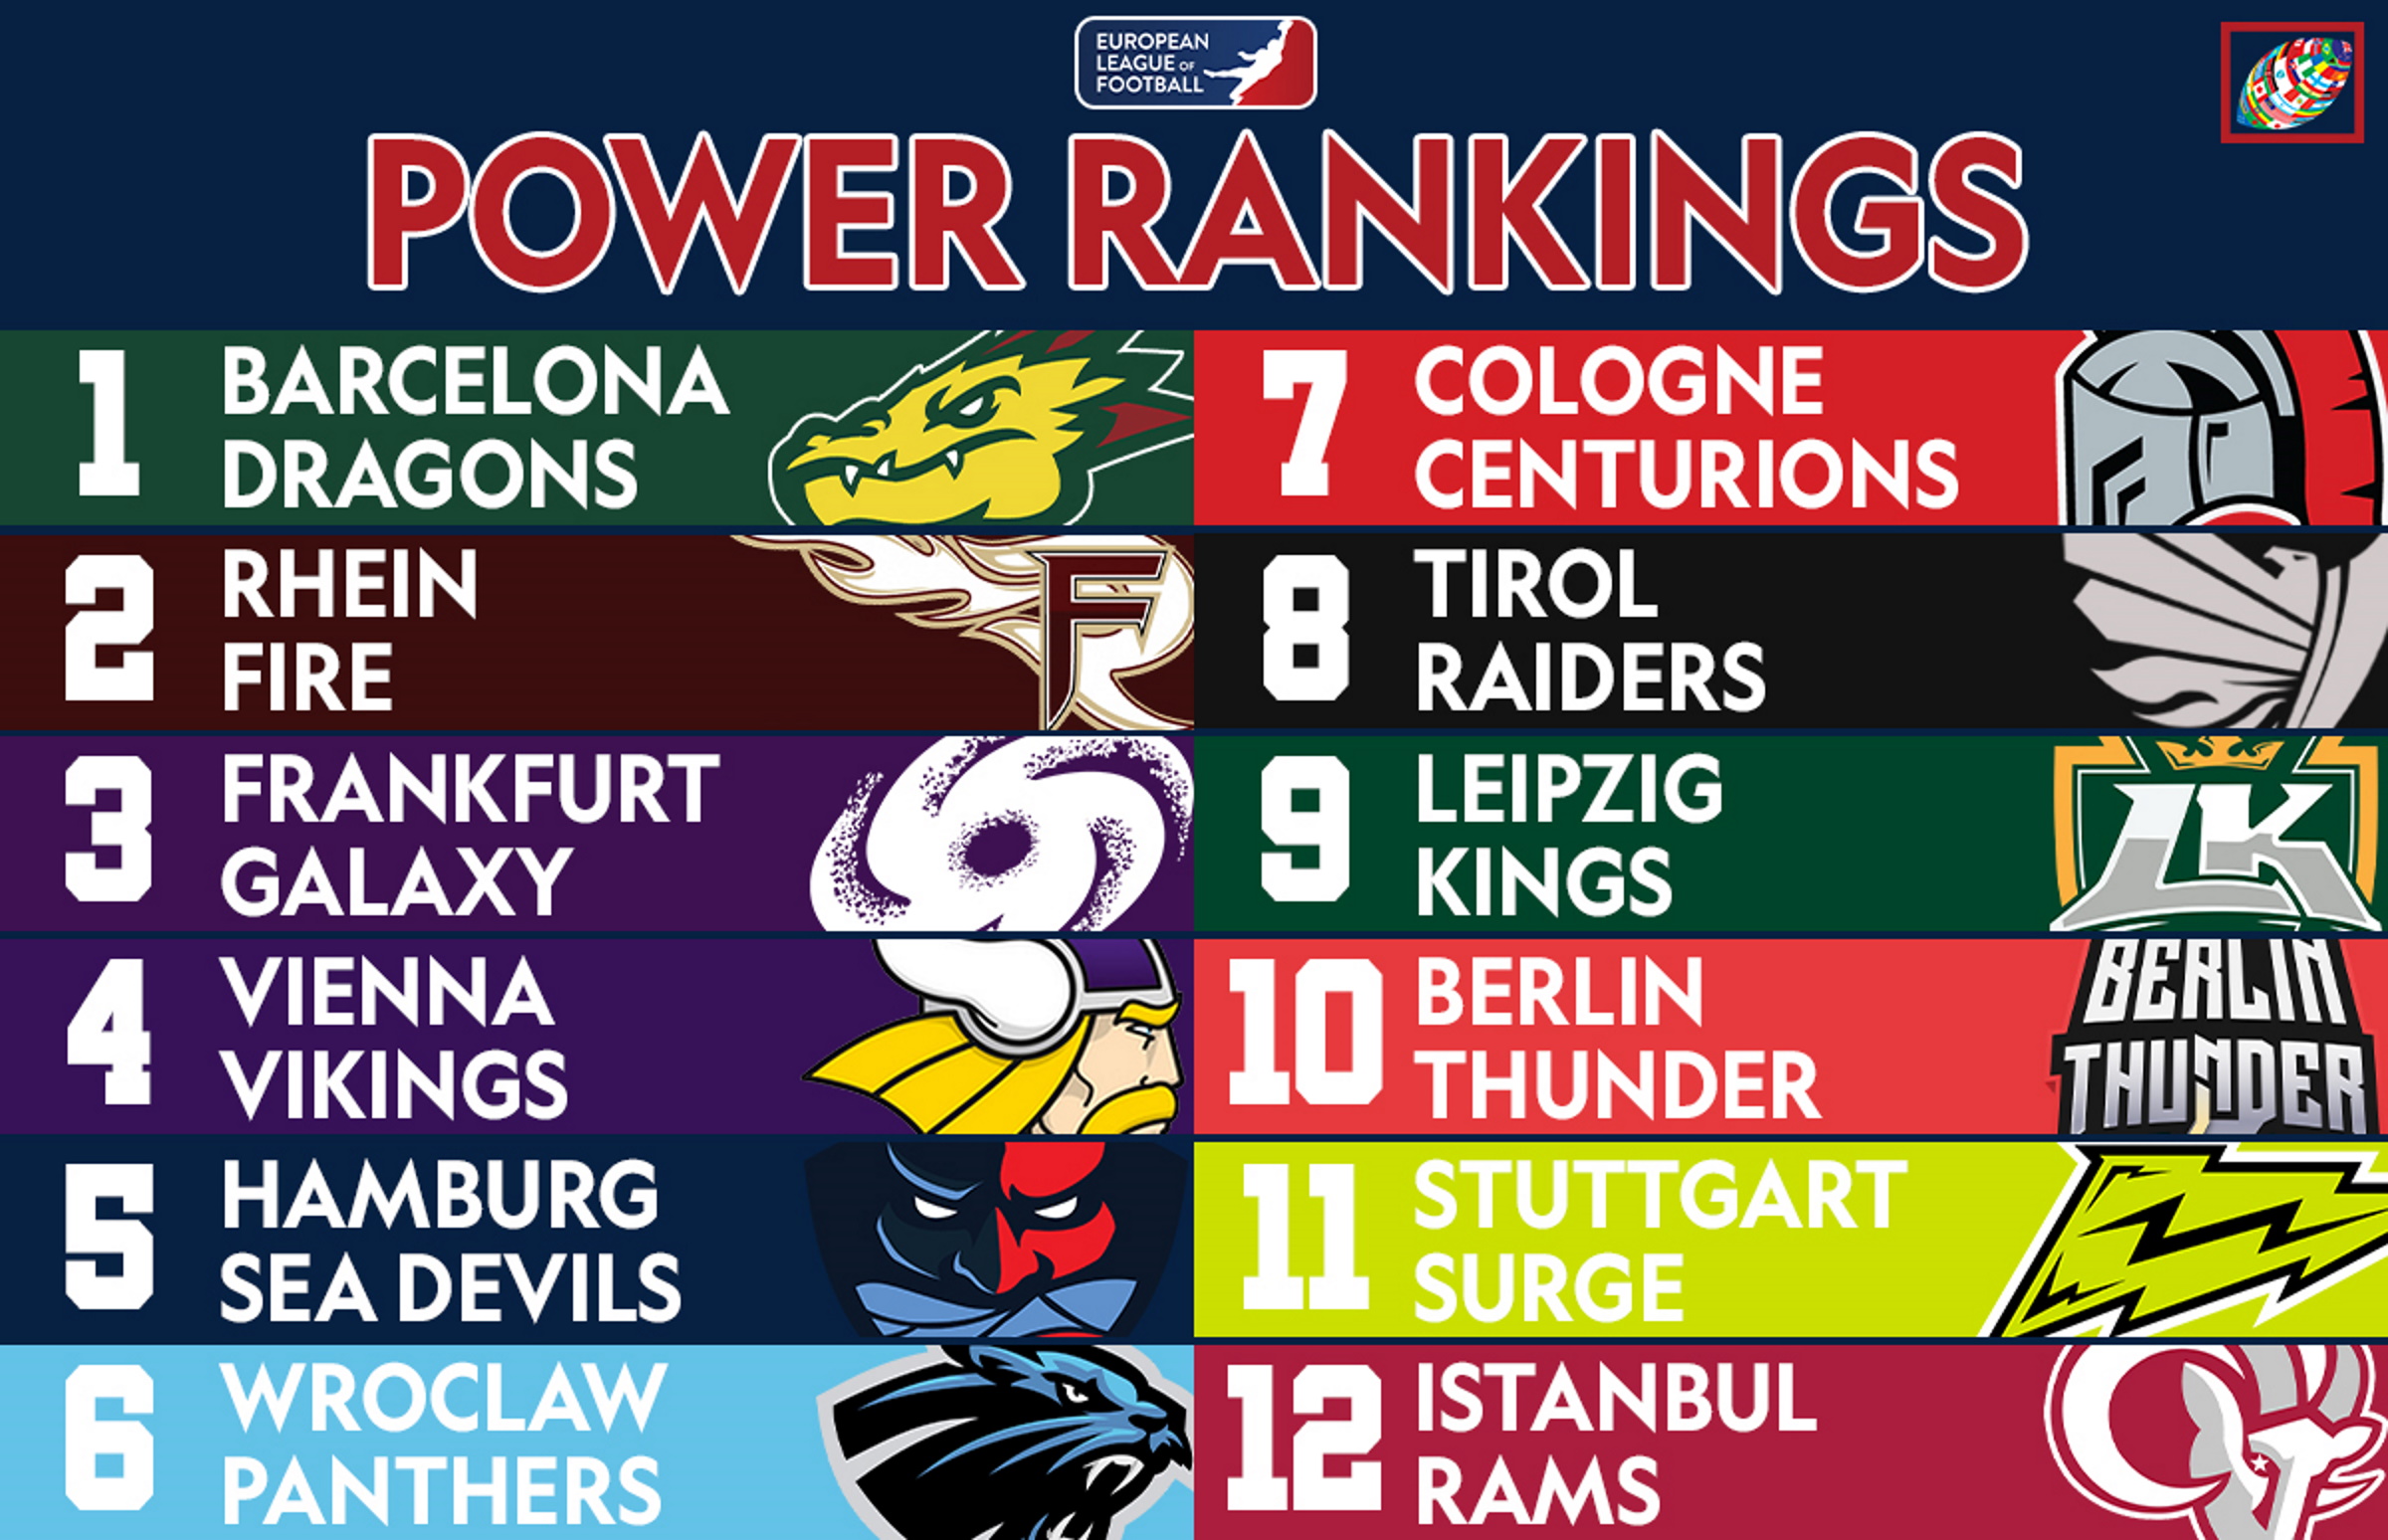 2021 Minor League team power rankings